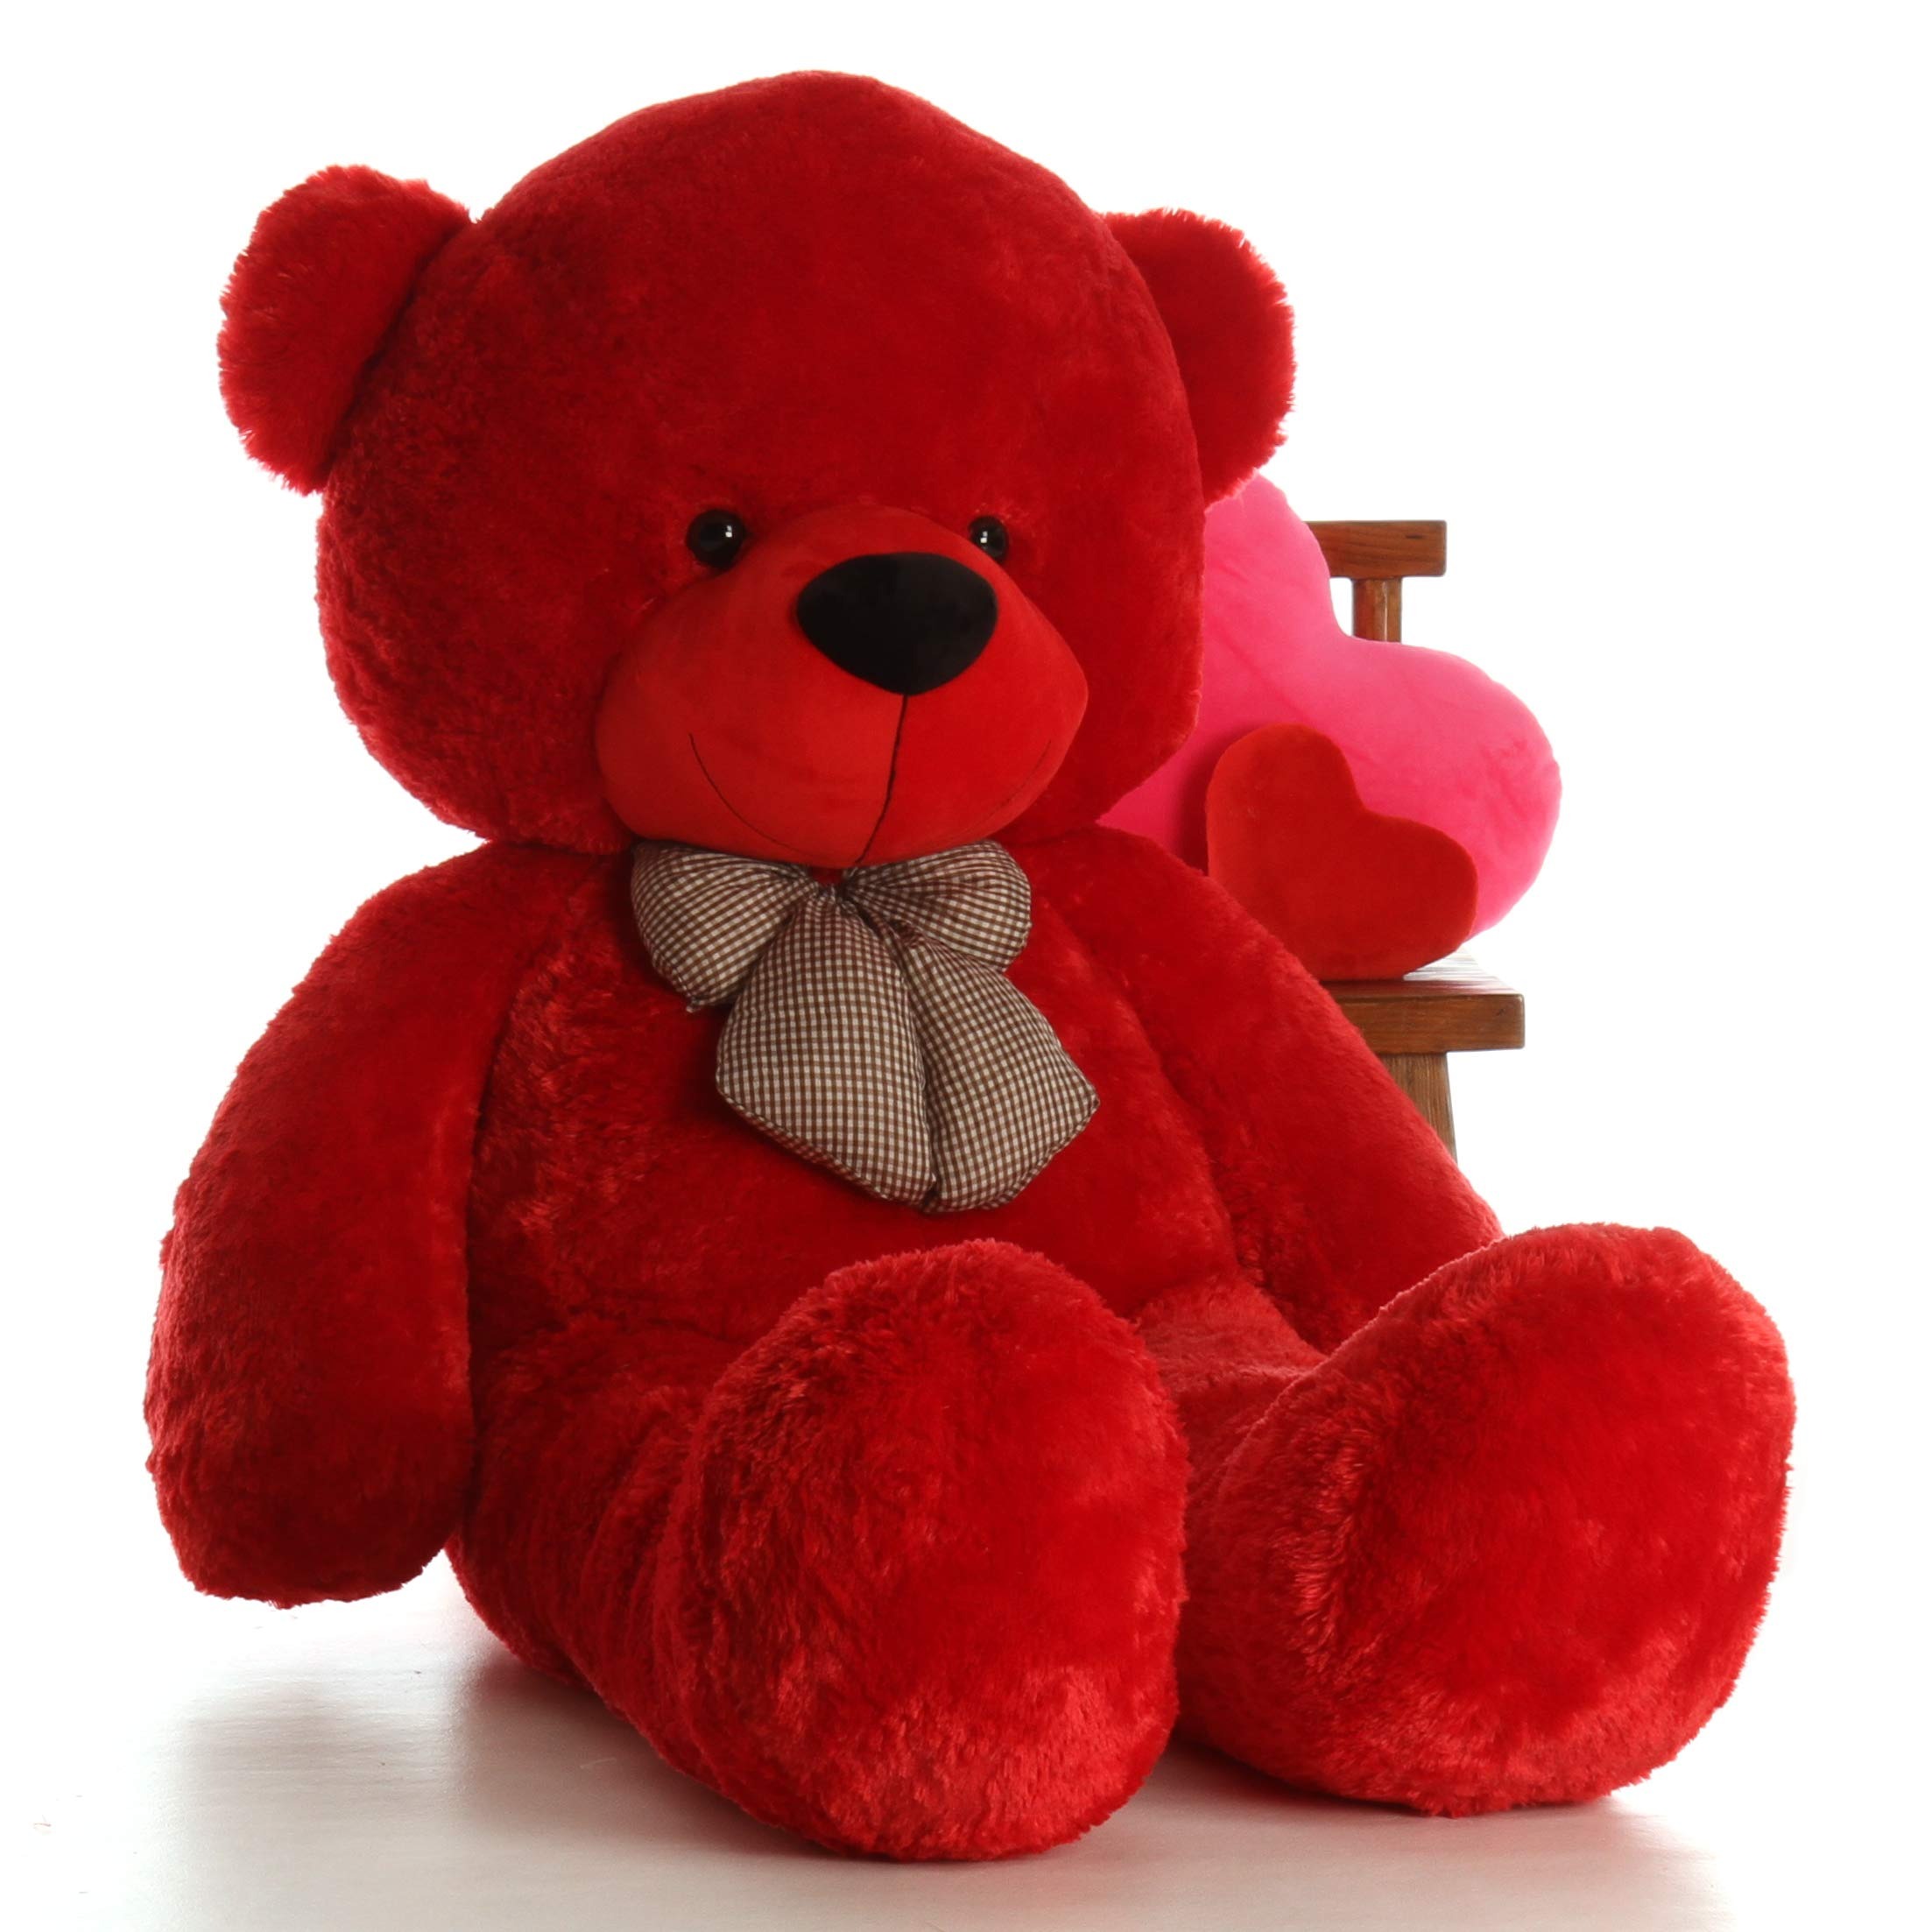 Soft 3ft Hugable Stuffed Cute Premium Quality Teddy Bear, Red